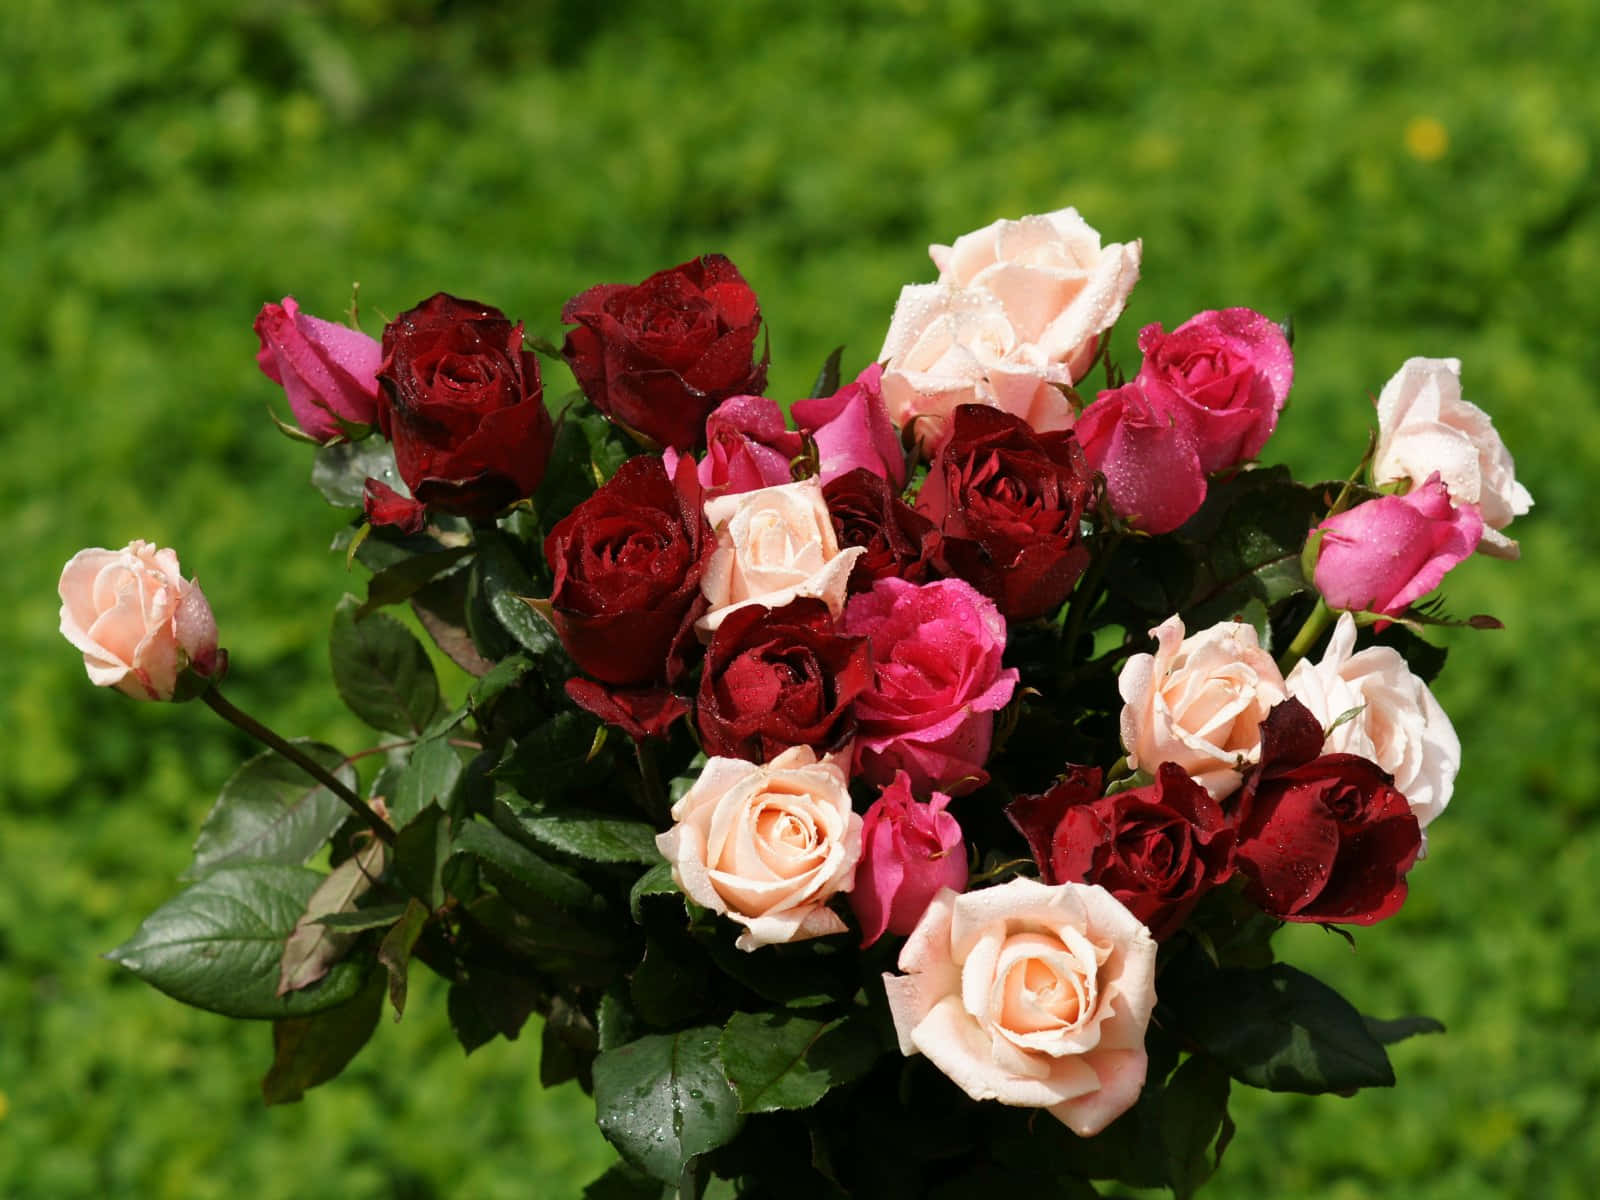 Download Rose Bouquet In Garden Pictures | Wallpapers.com